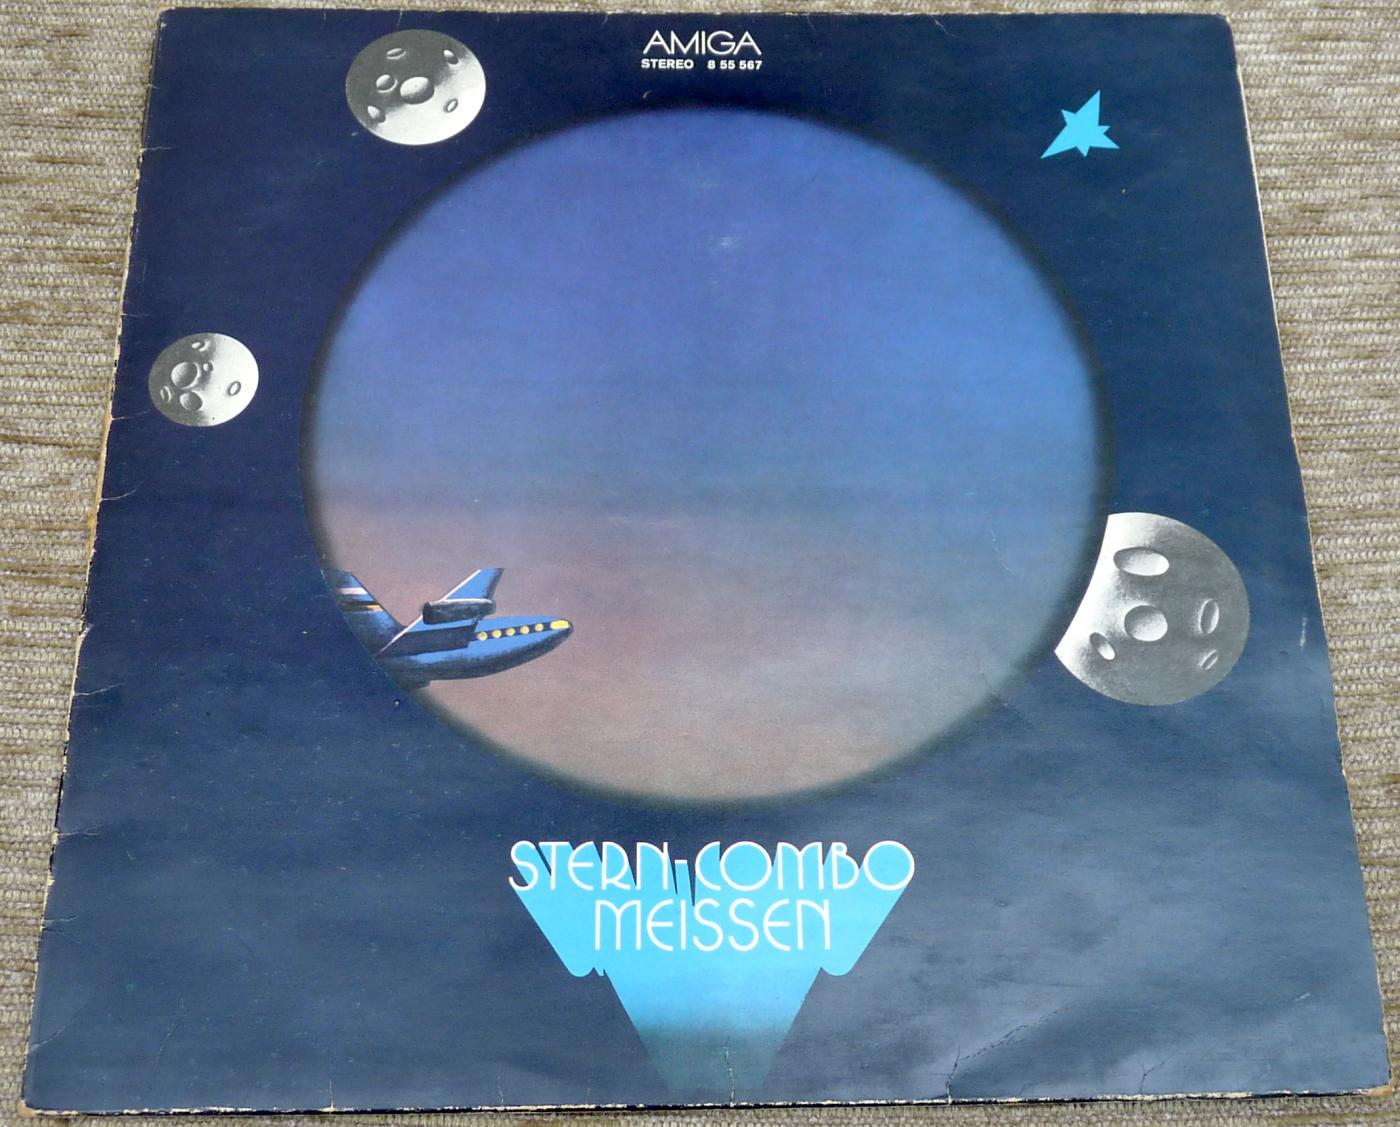 Stern Combo Meissen, Live, 1977, Amiga, 855567